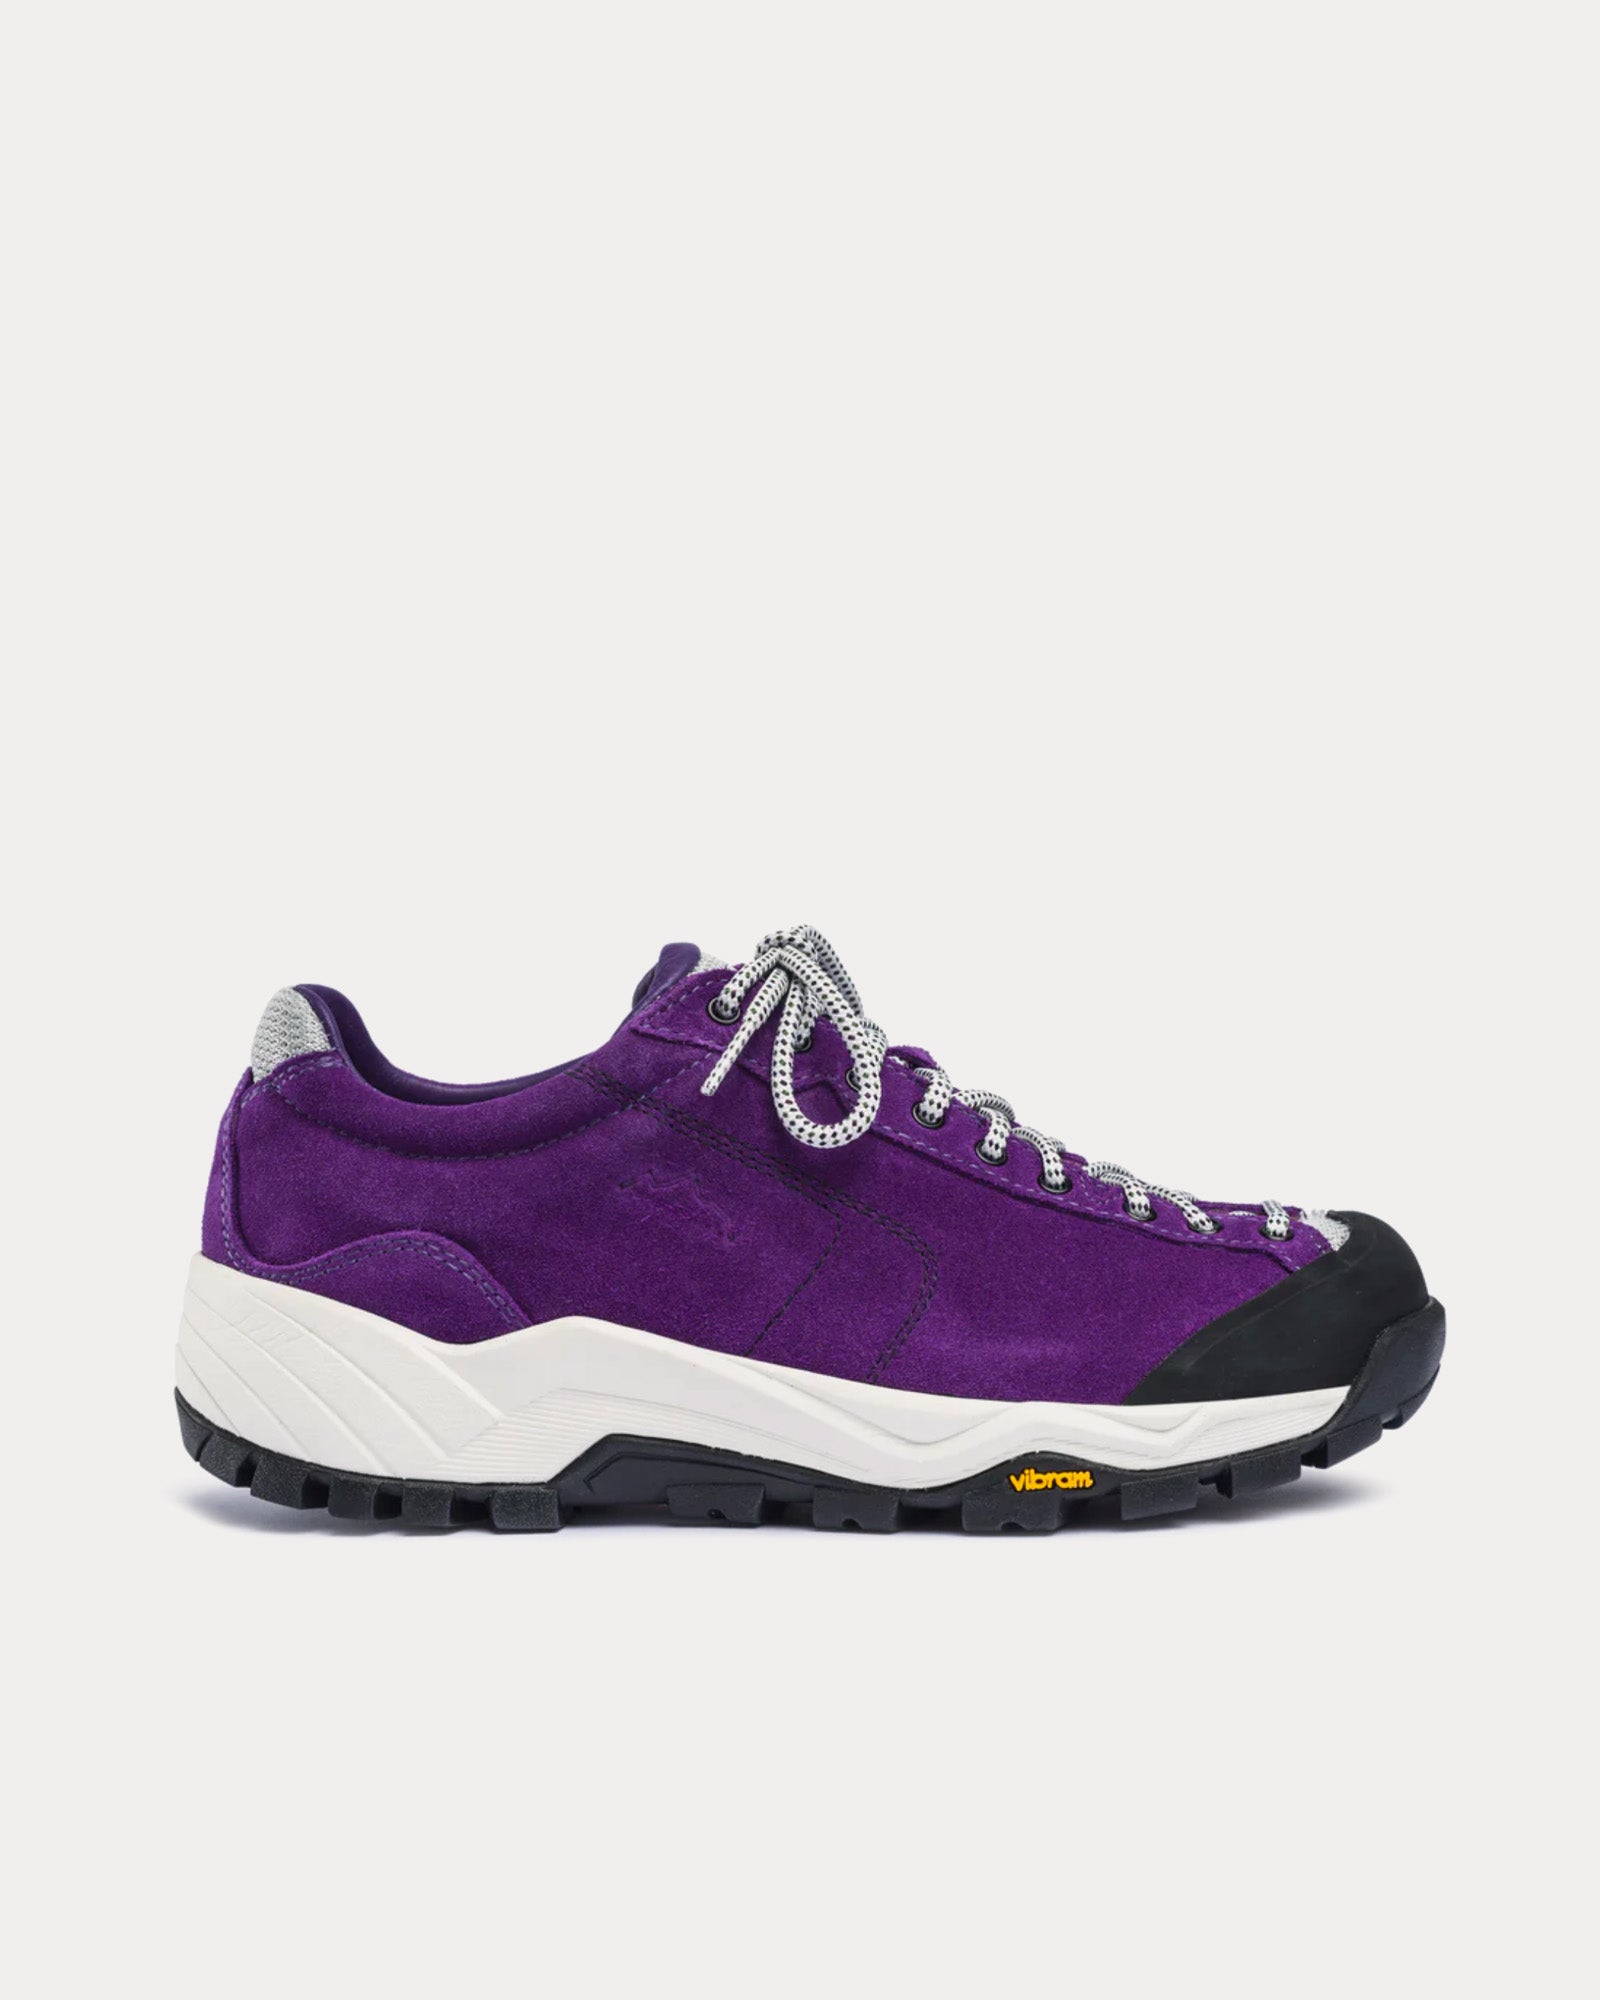 Diemme - Movida Suede Purple Low Top Sneakers